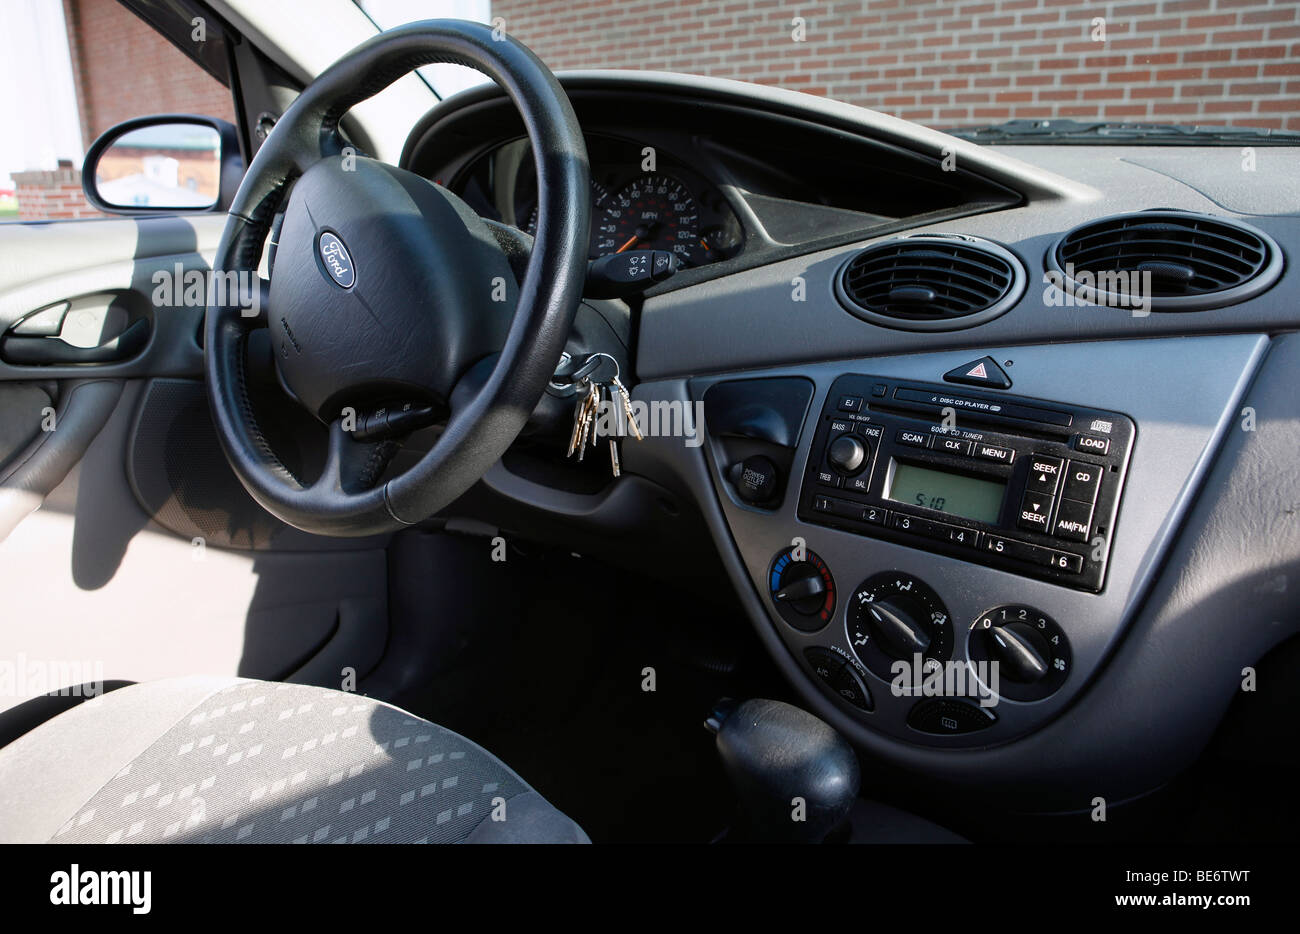 Ford Focus interior Stock Photo - Alamy